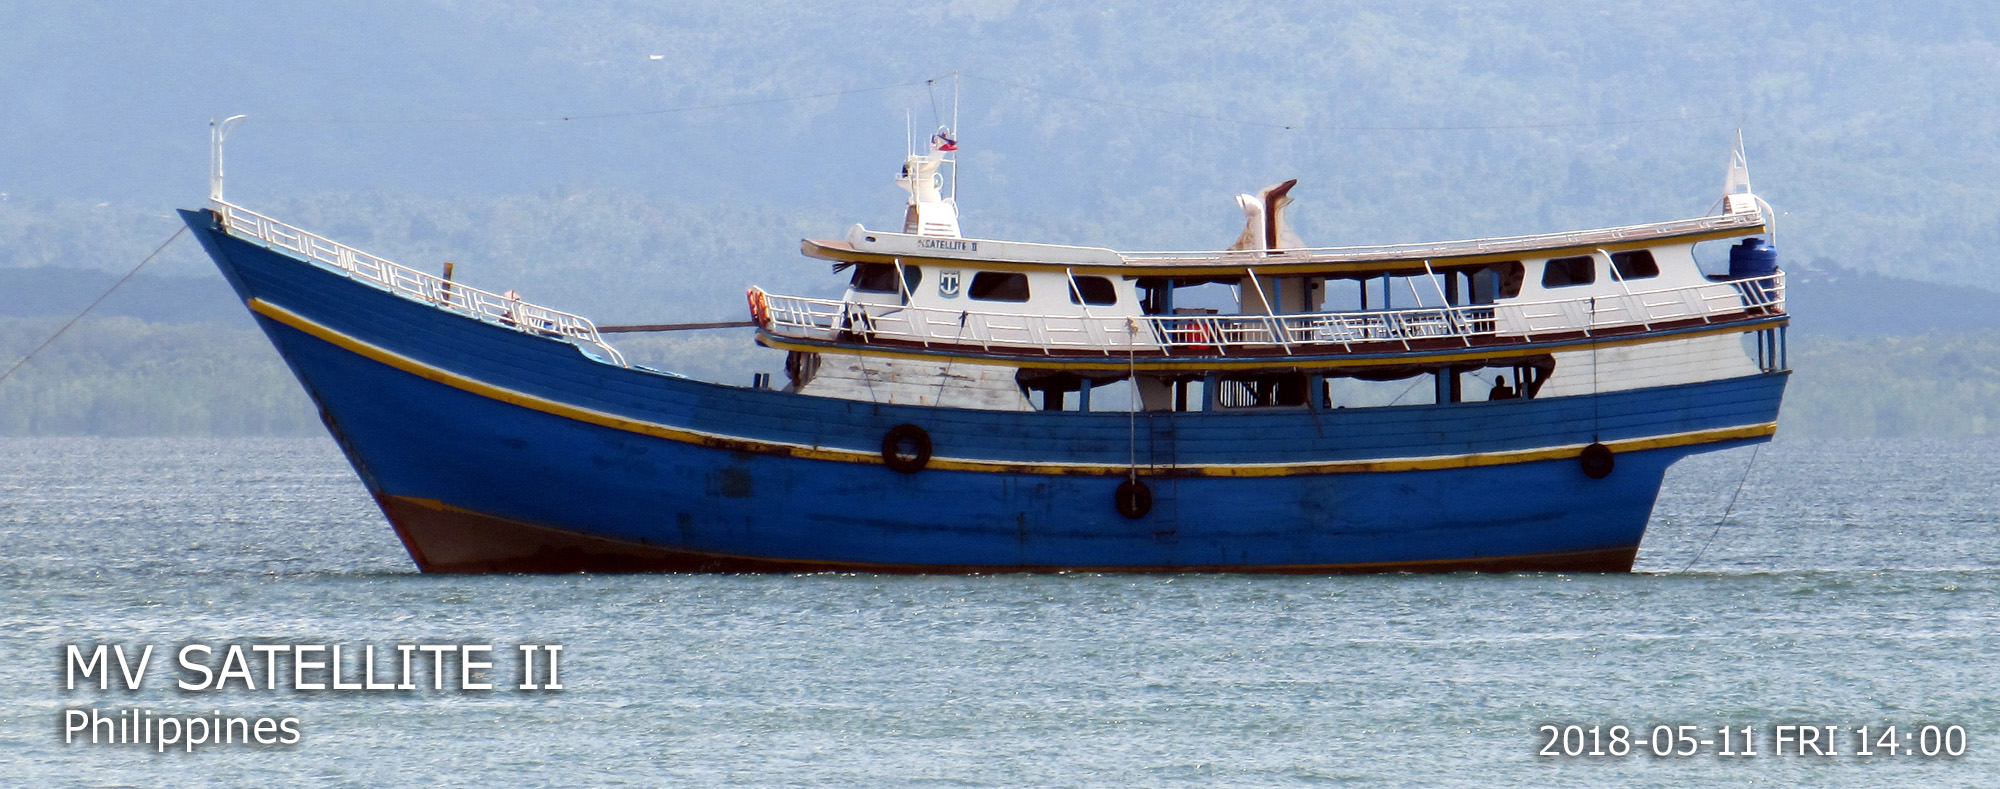 MV SATELLITE II Philippines